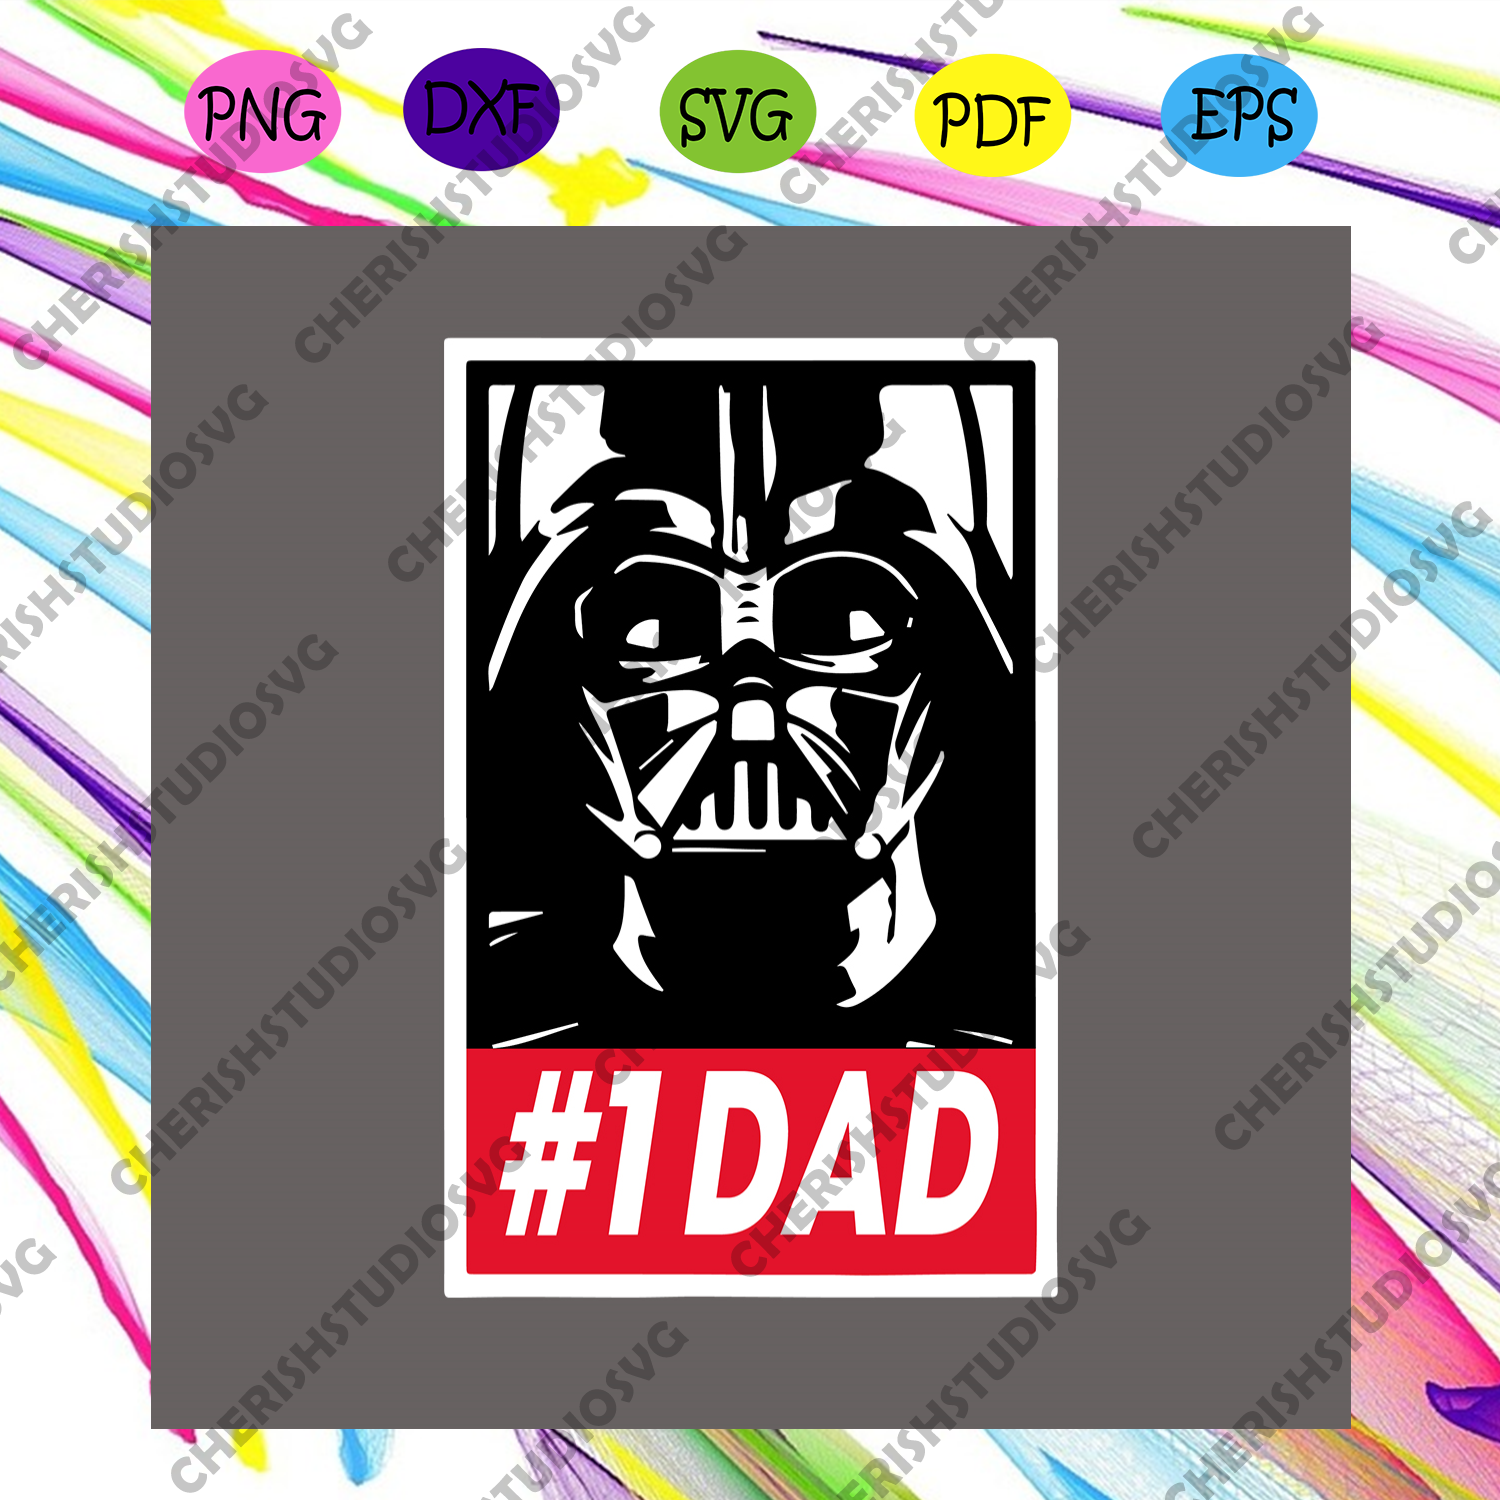 Download Star Wars Darth Vader 1 Dad Svg Fathers Day Svg Star Wars Svg Vade Cherishsvgstudio